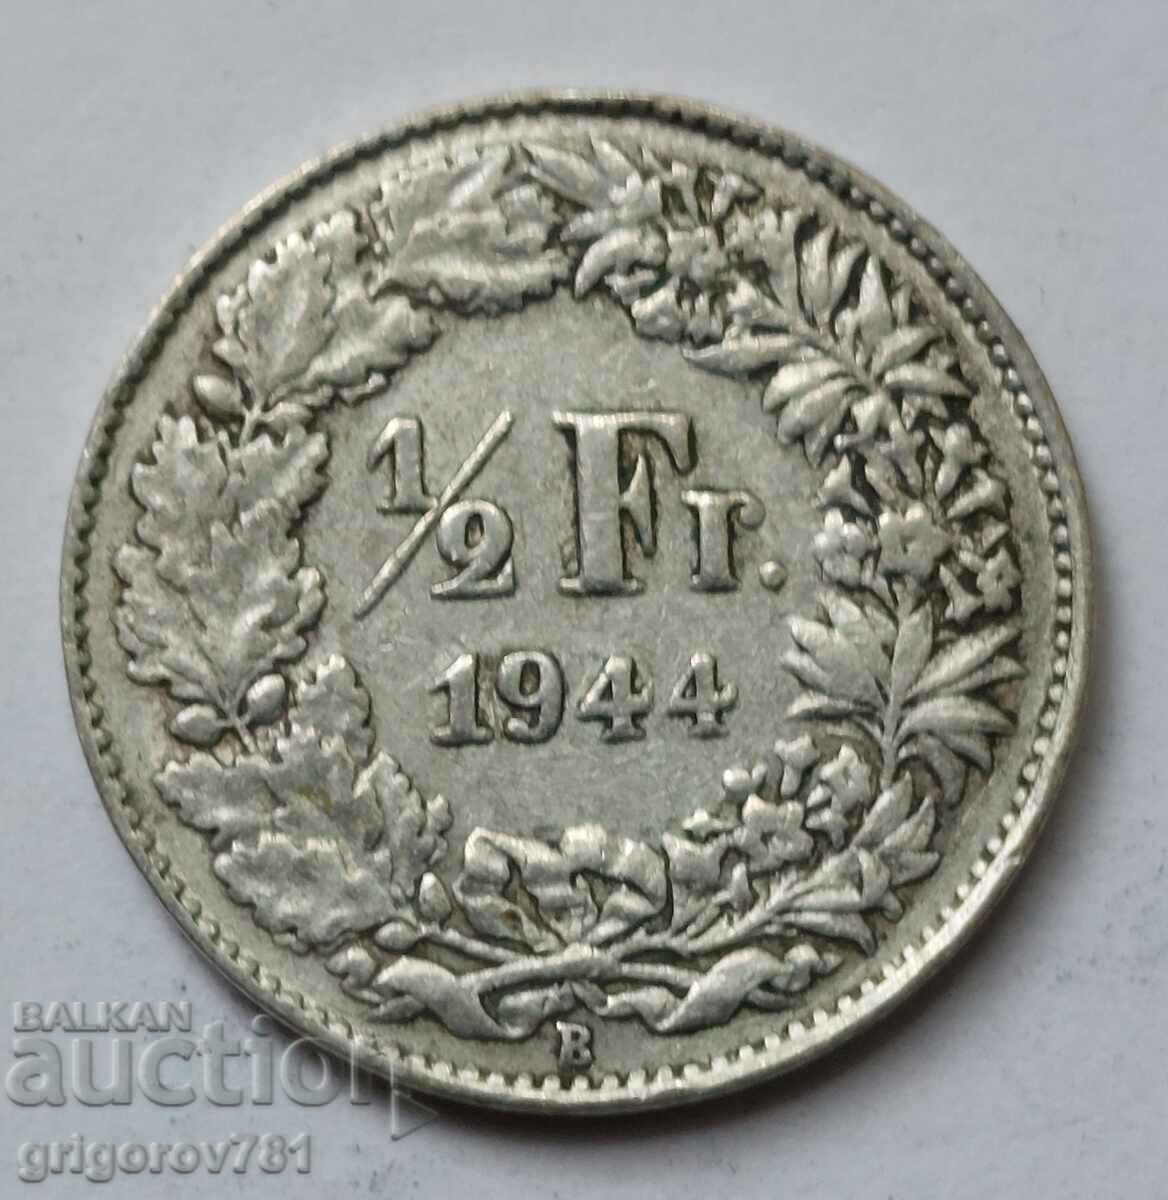 1/2 Franc Silver Switzerland 1944 B - Silver Coin #71